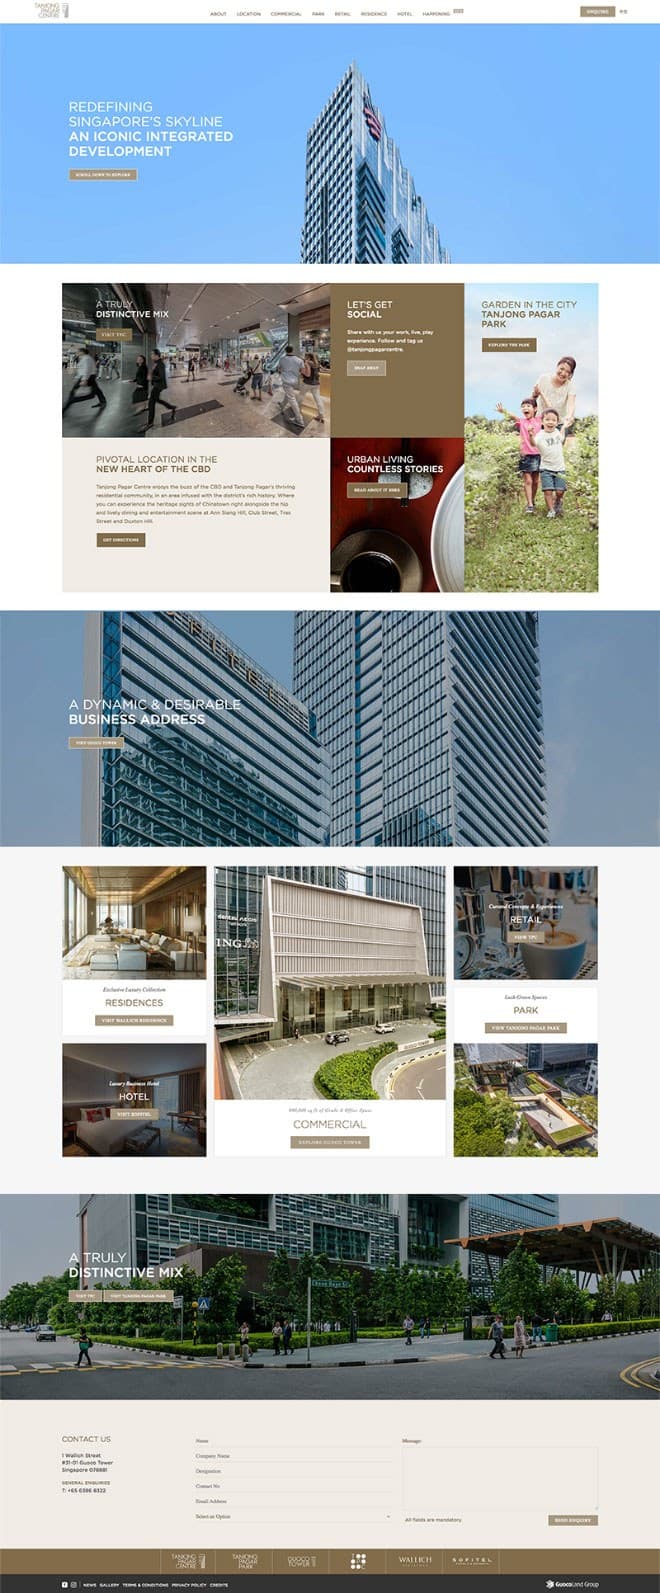 Guoco Tower - Homepage